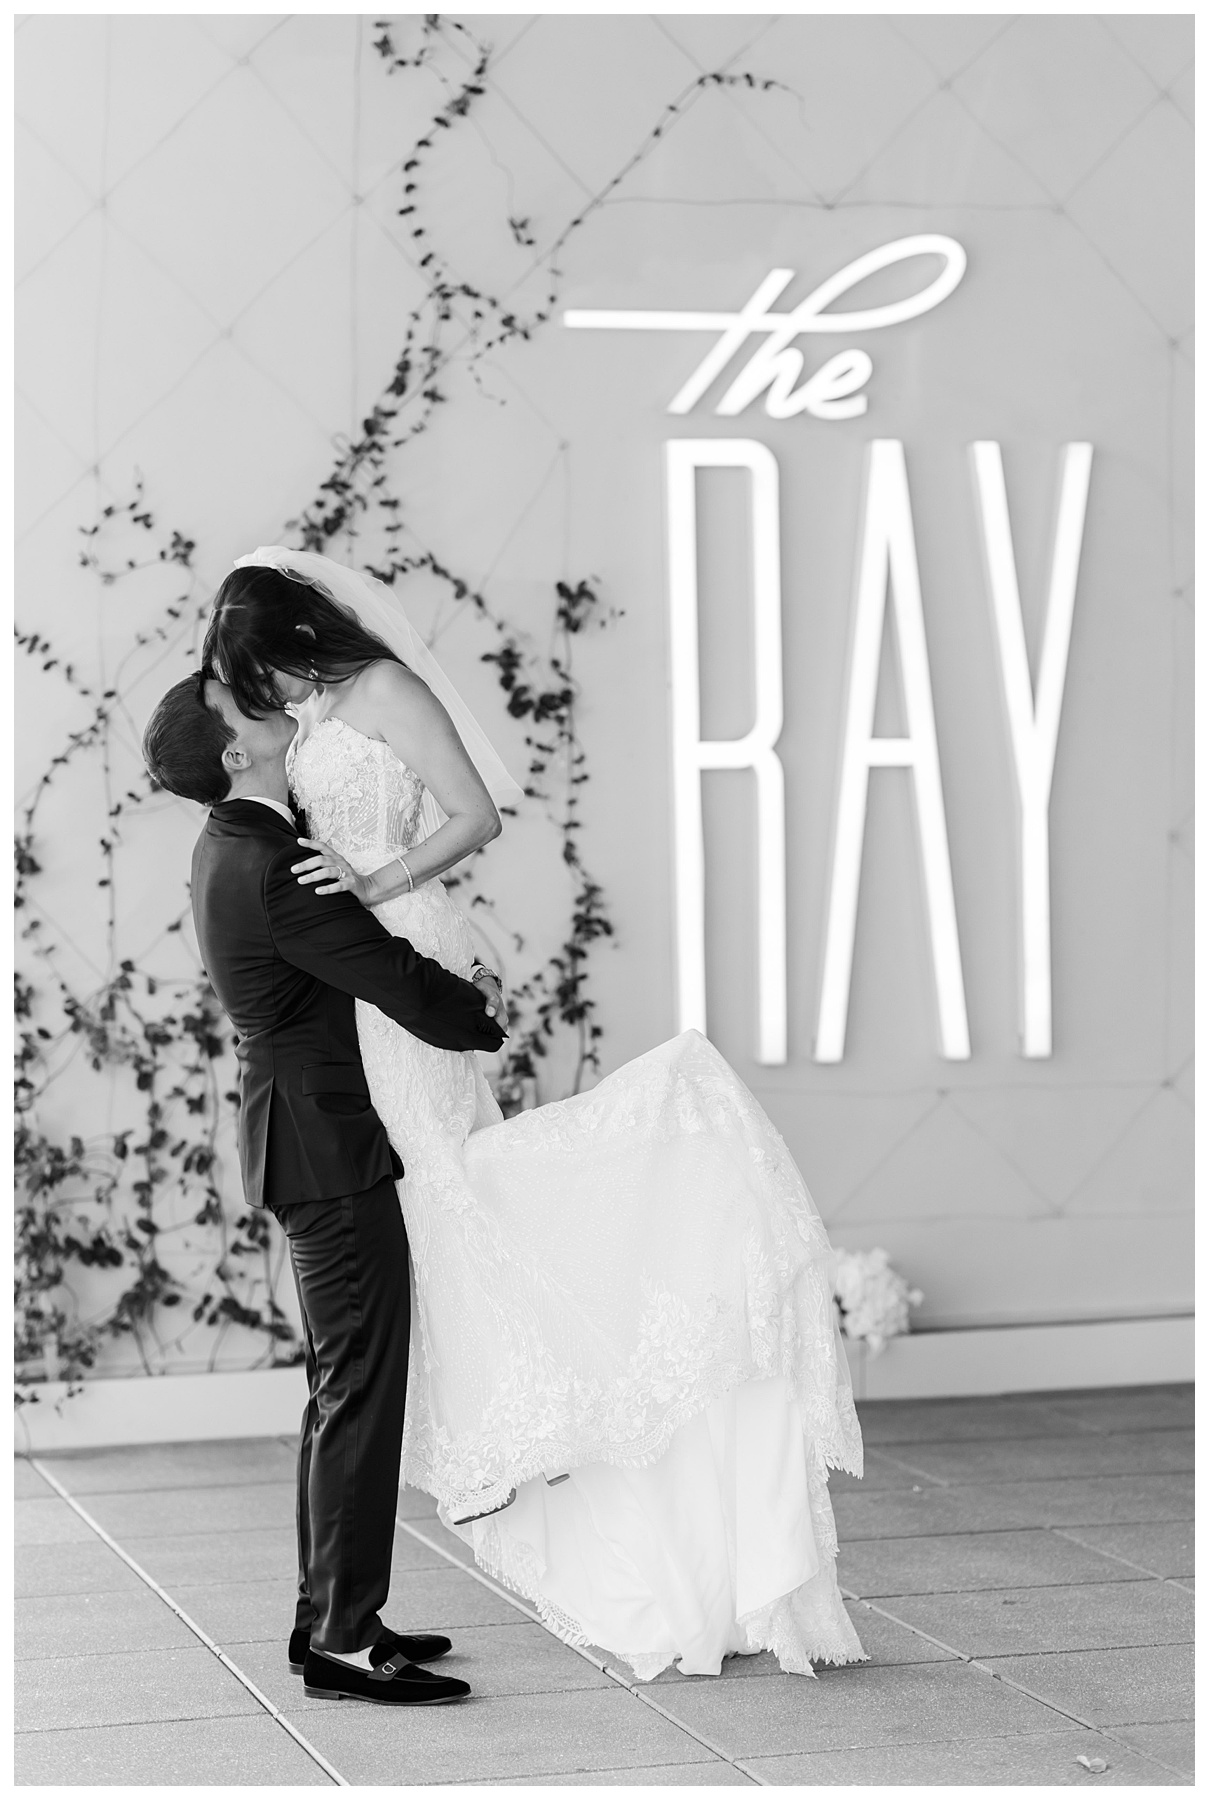 The Ray Hotel Wedding bride and groom wedding portraits